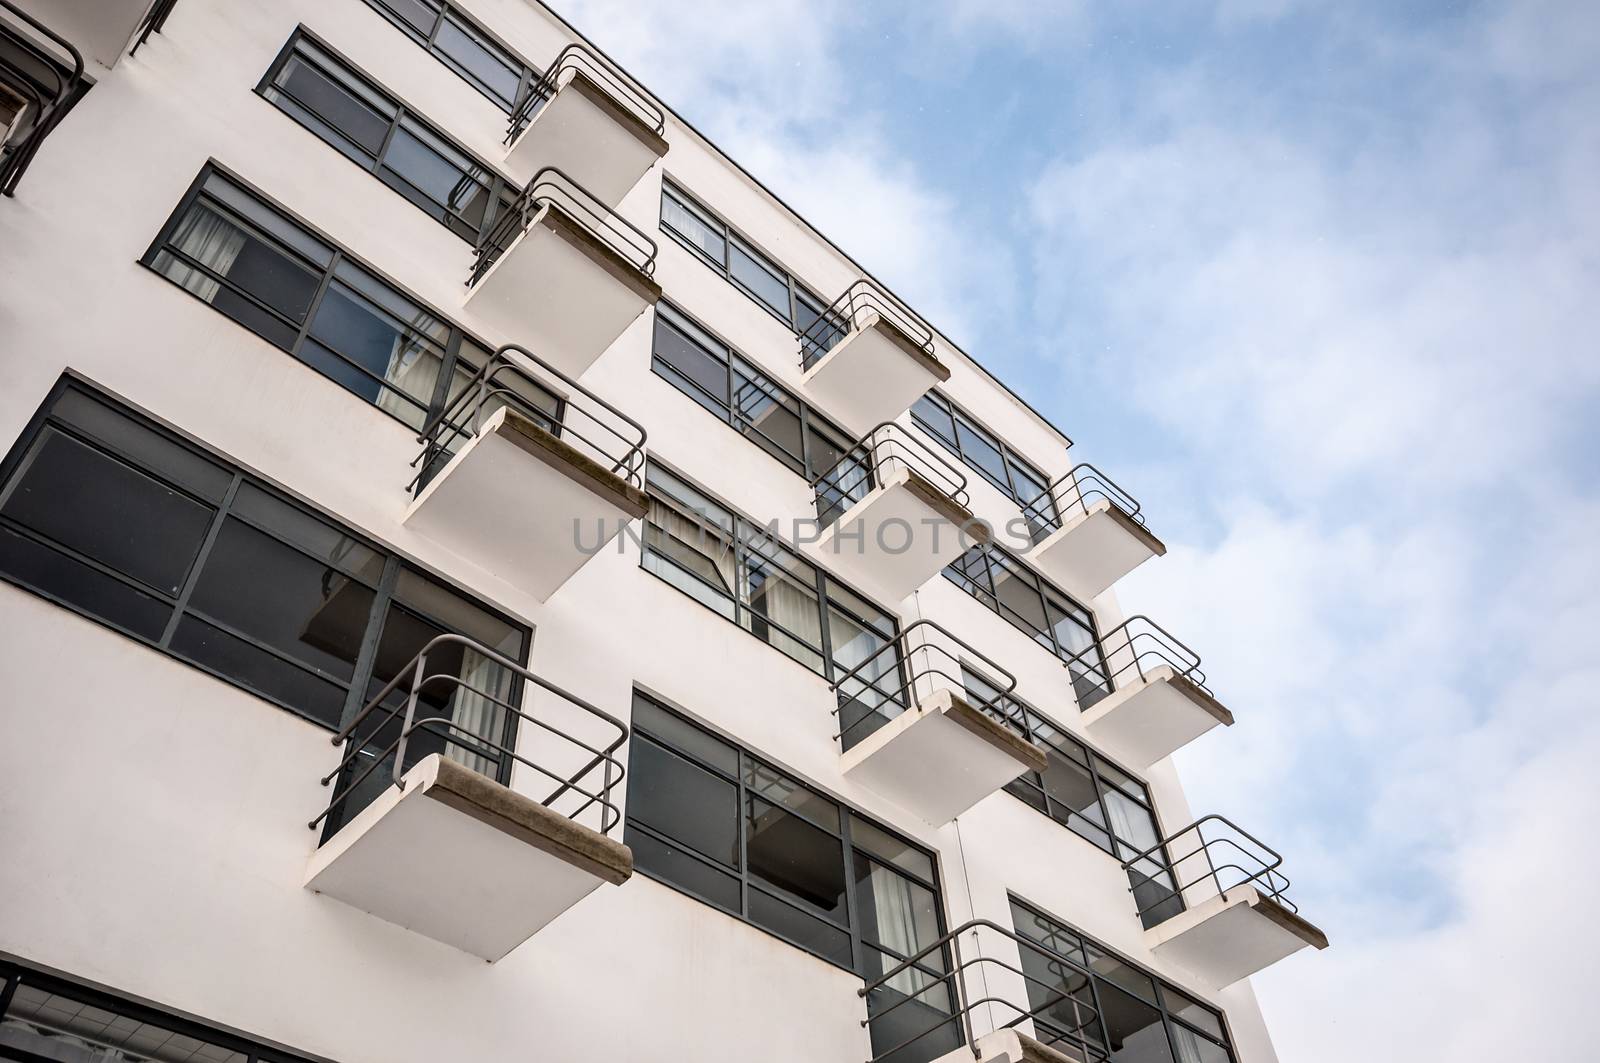 Bauhaus Dessau by Jule_Berlin